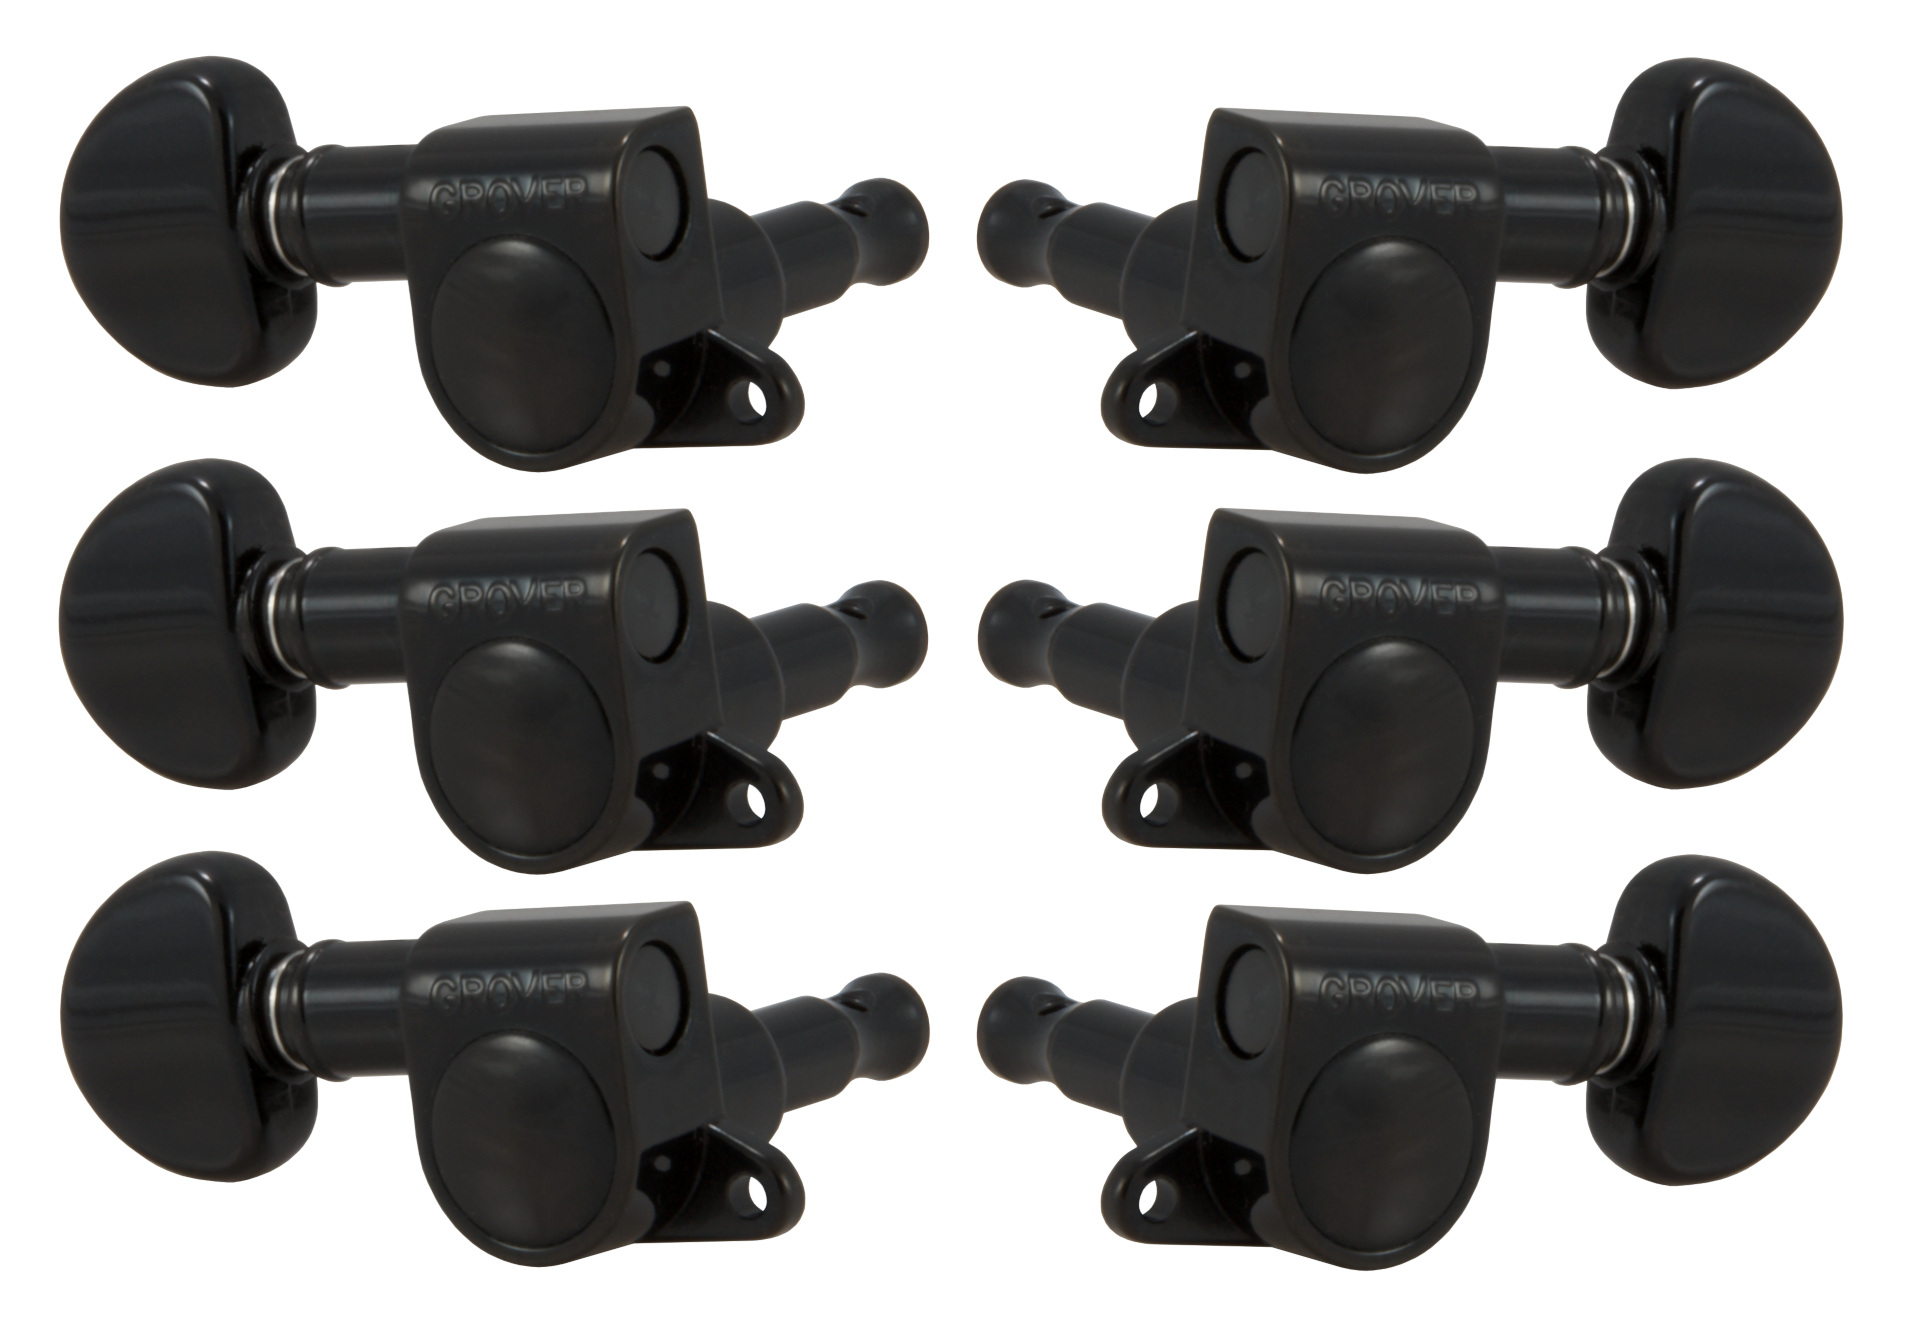 Grover 205BC Mini Rotomatics with Round Button - Guitar Machine Heads, 3 + 3 - Black Chrome